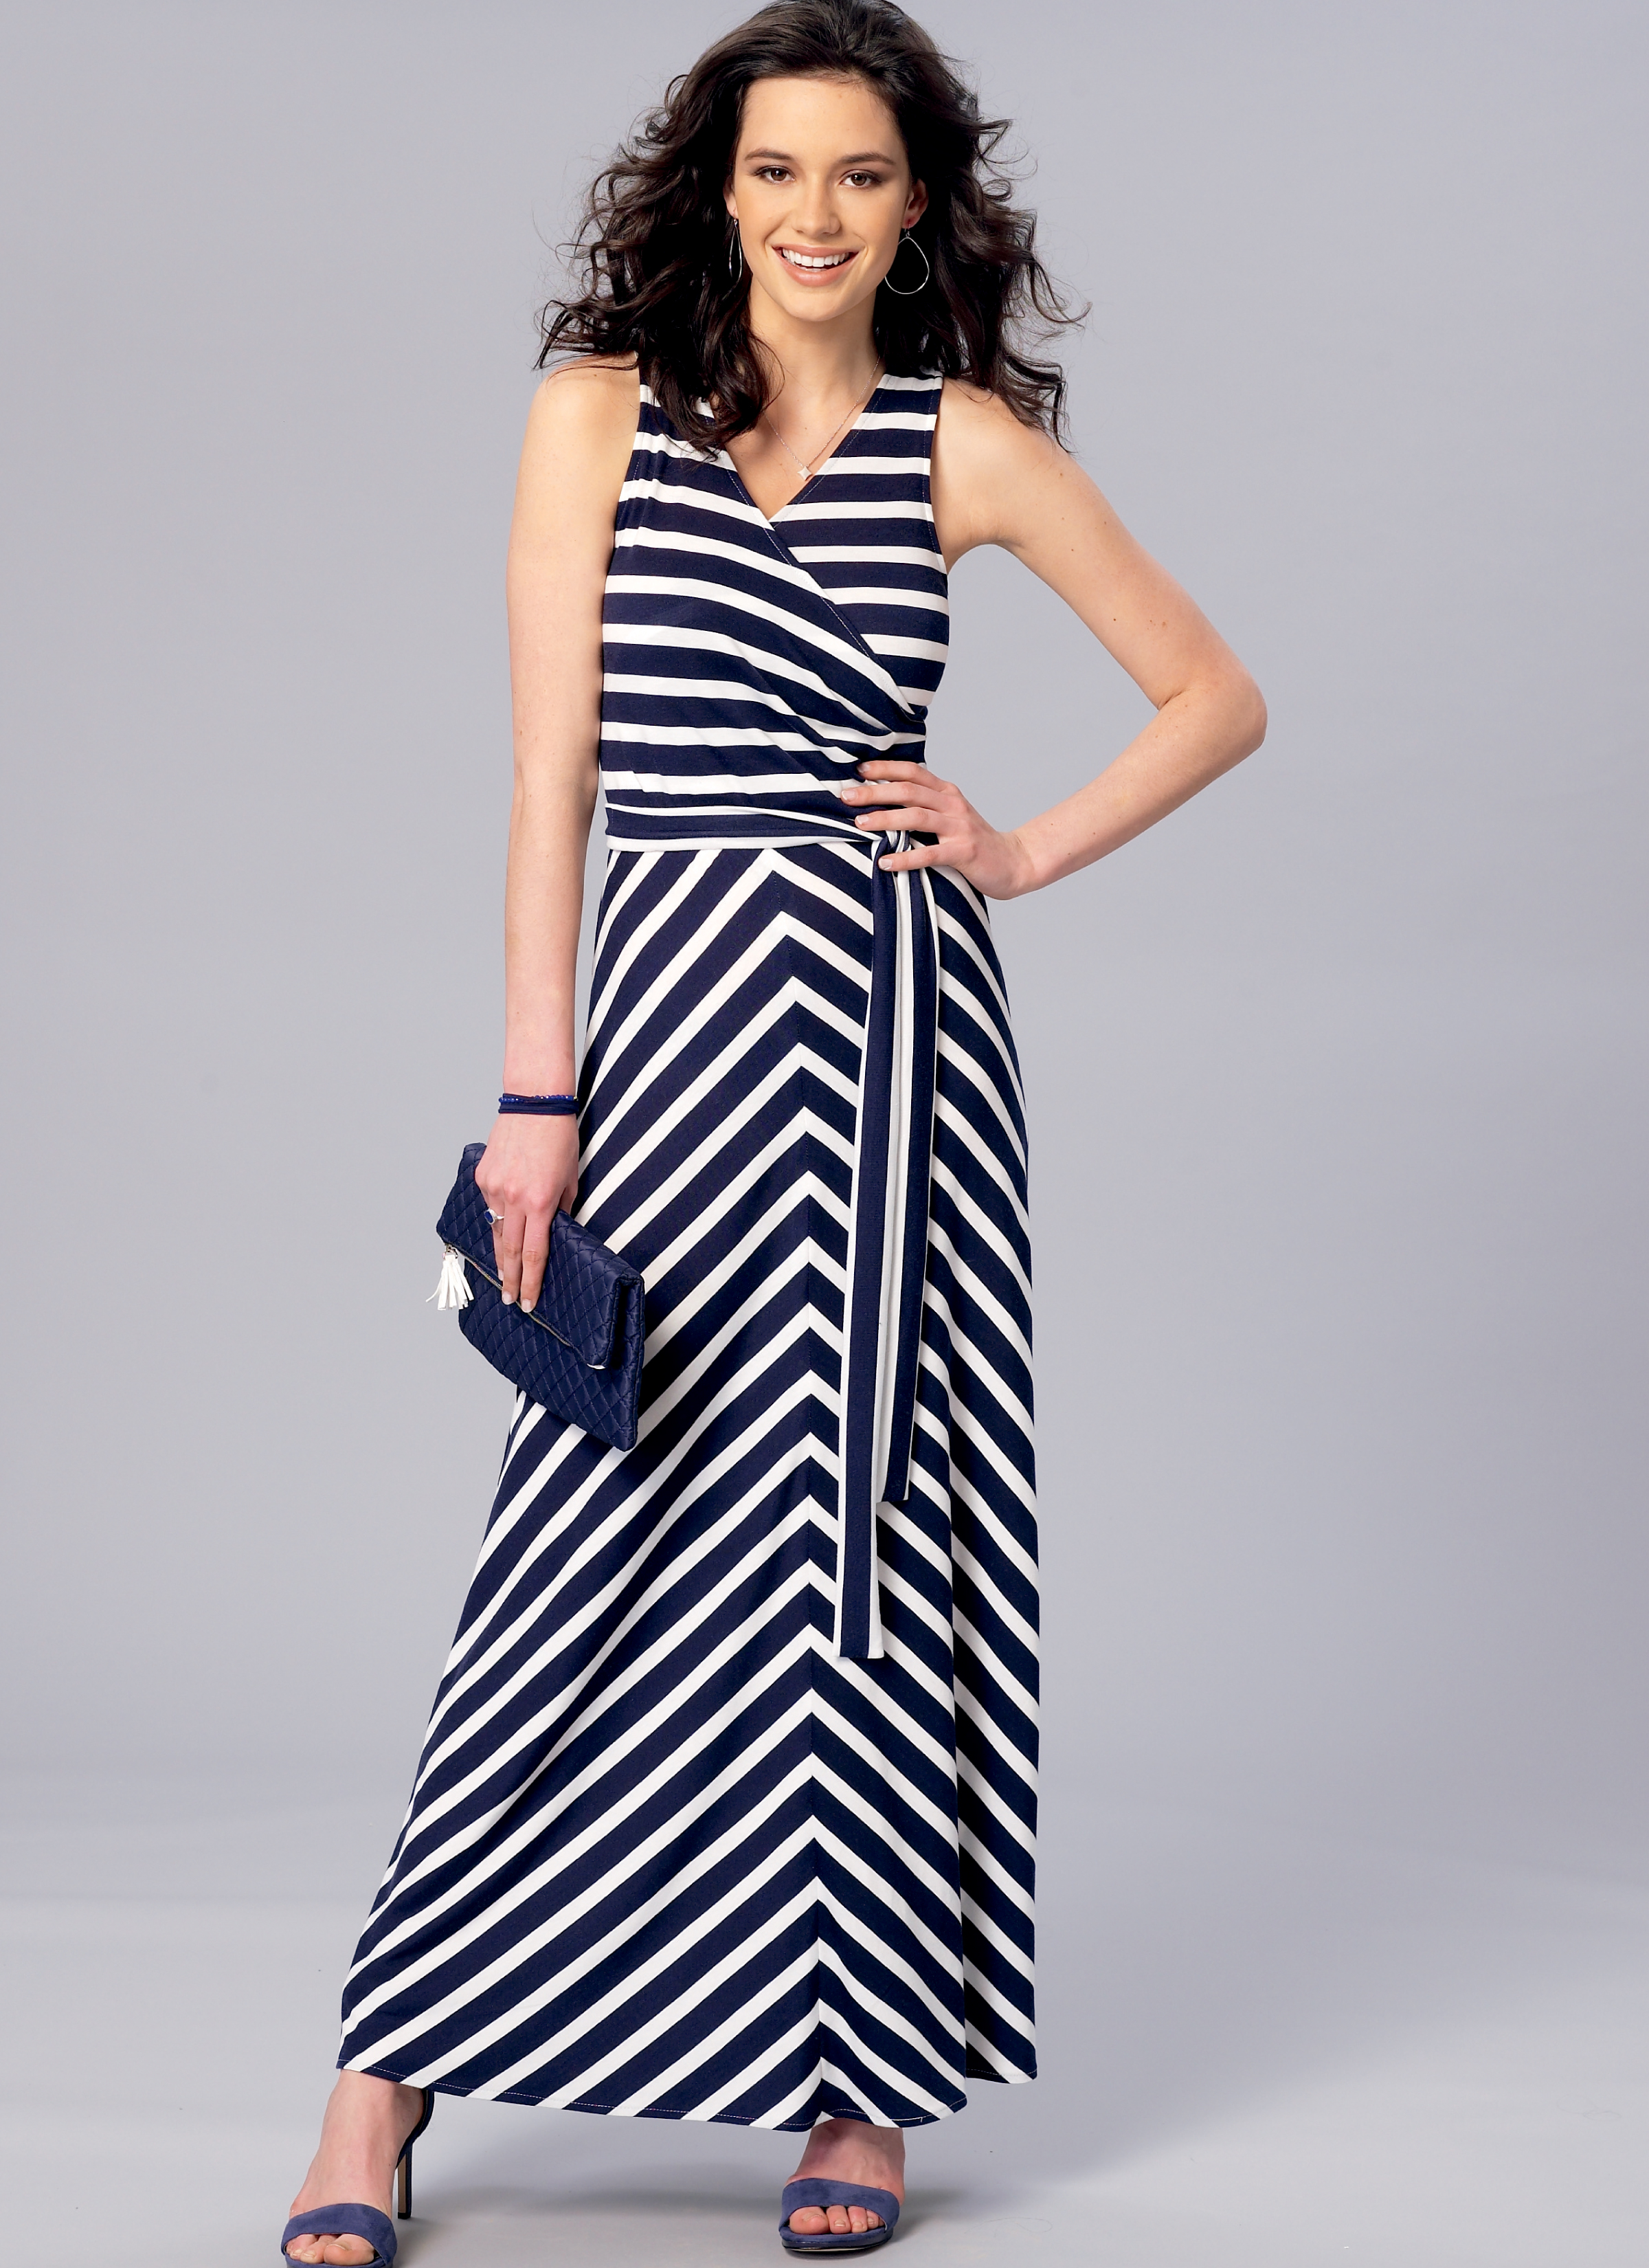 Kwik Sew Sewing Pattern 4169 Misses Surplice A-Line Dresses Sash XS-XL Uncut